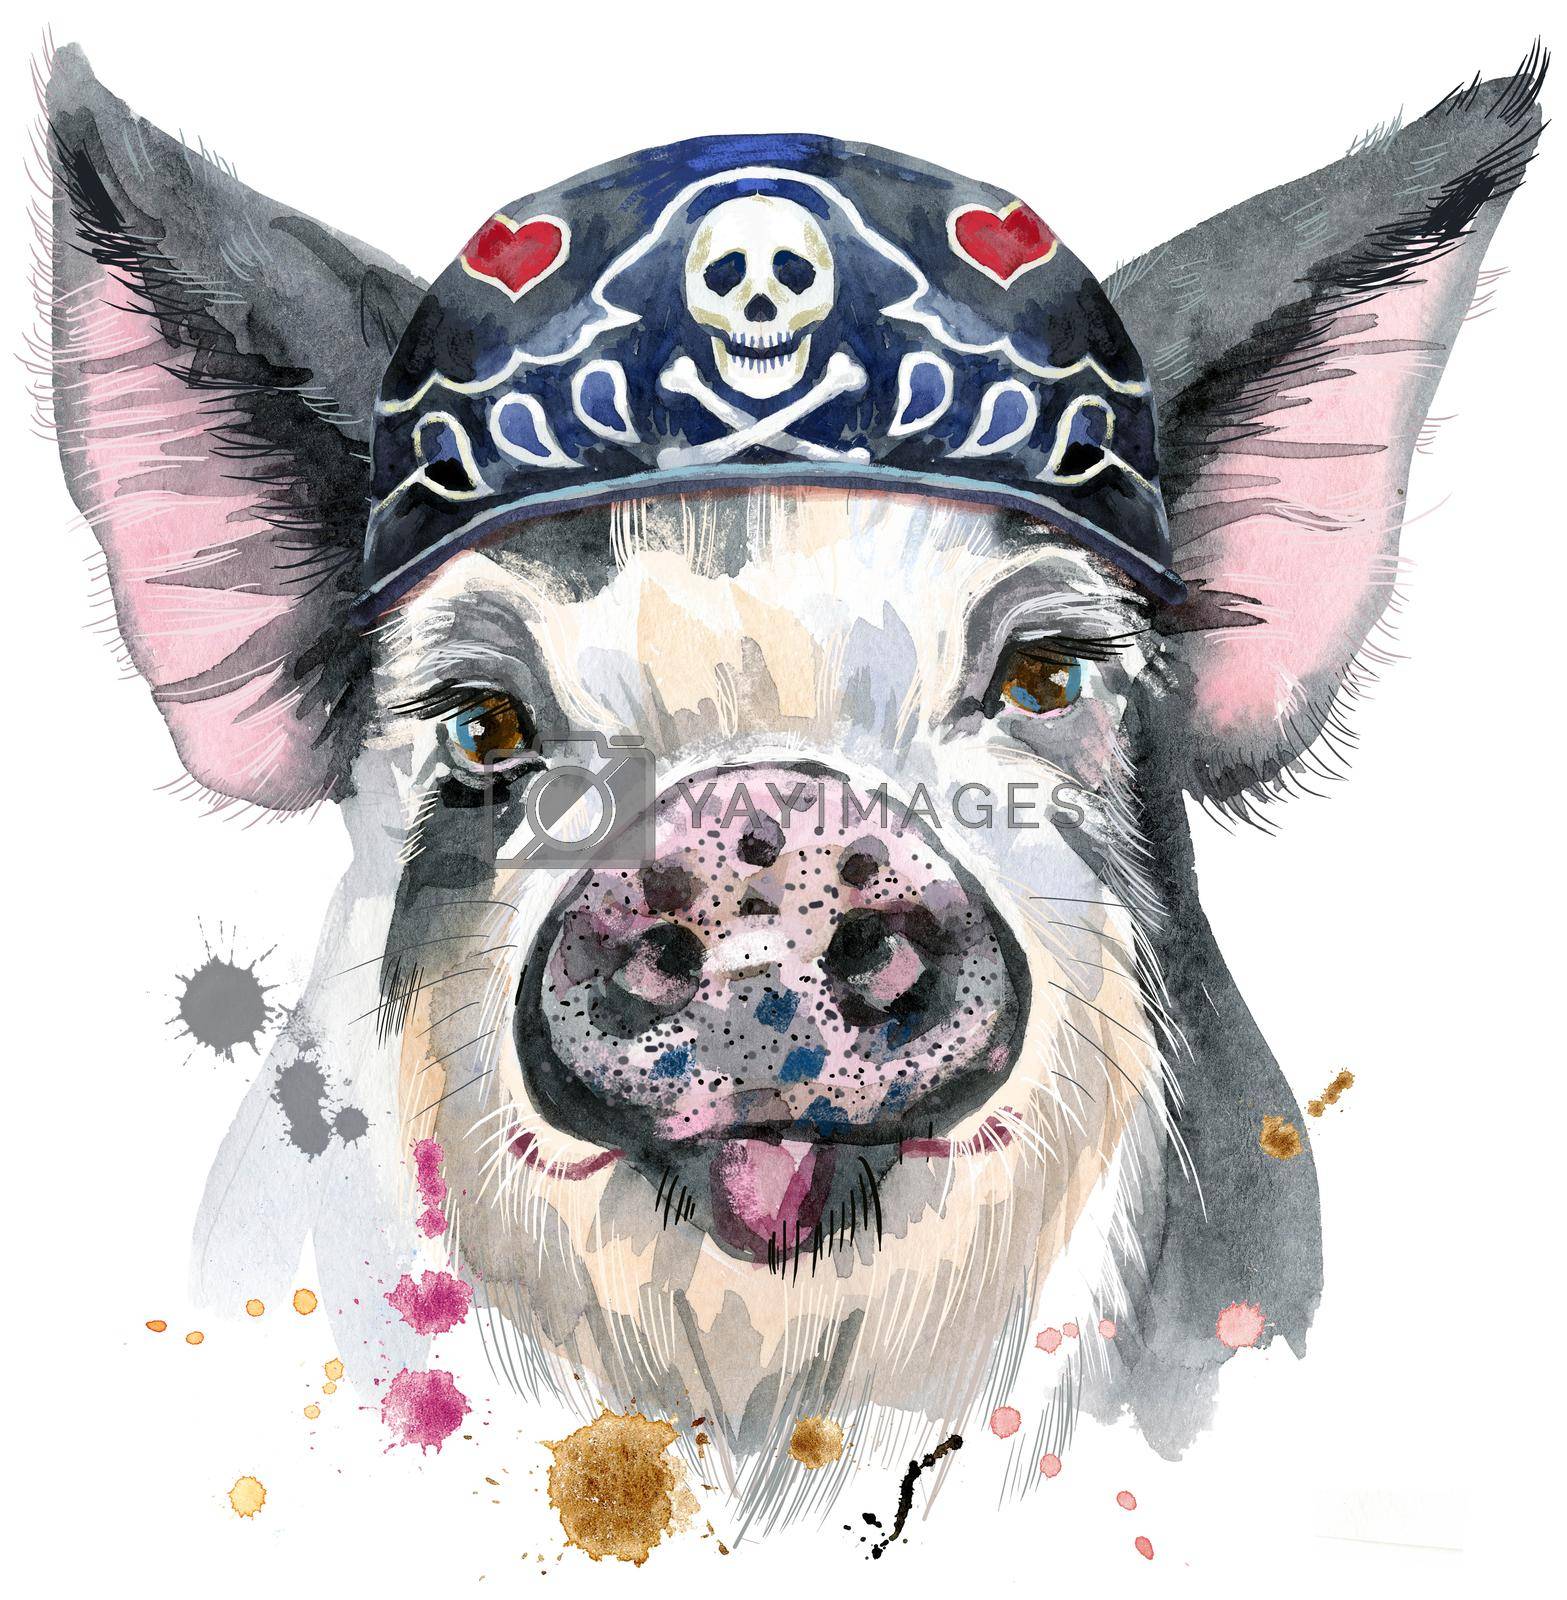 Royalty free image of Watercolor portrait of pig wearing biker bandana by NataOmsk